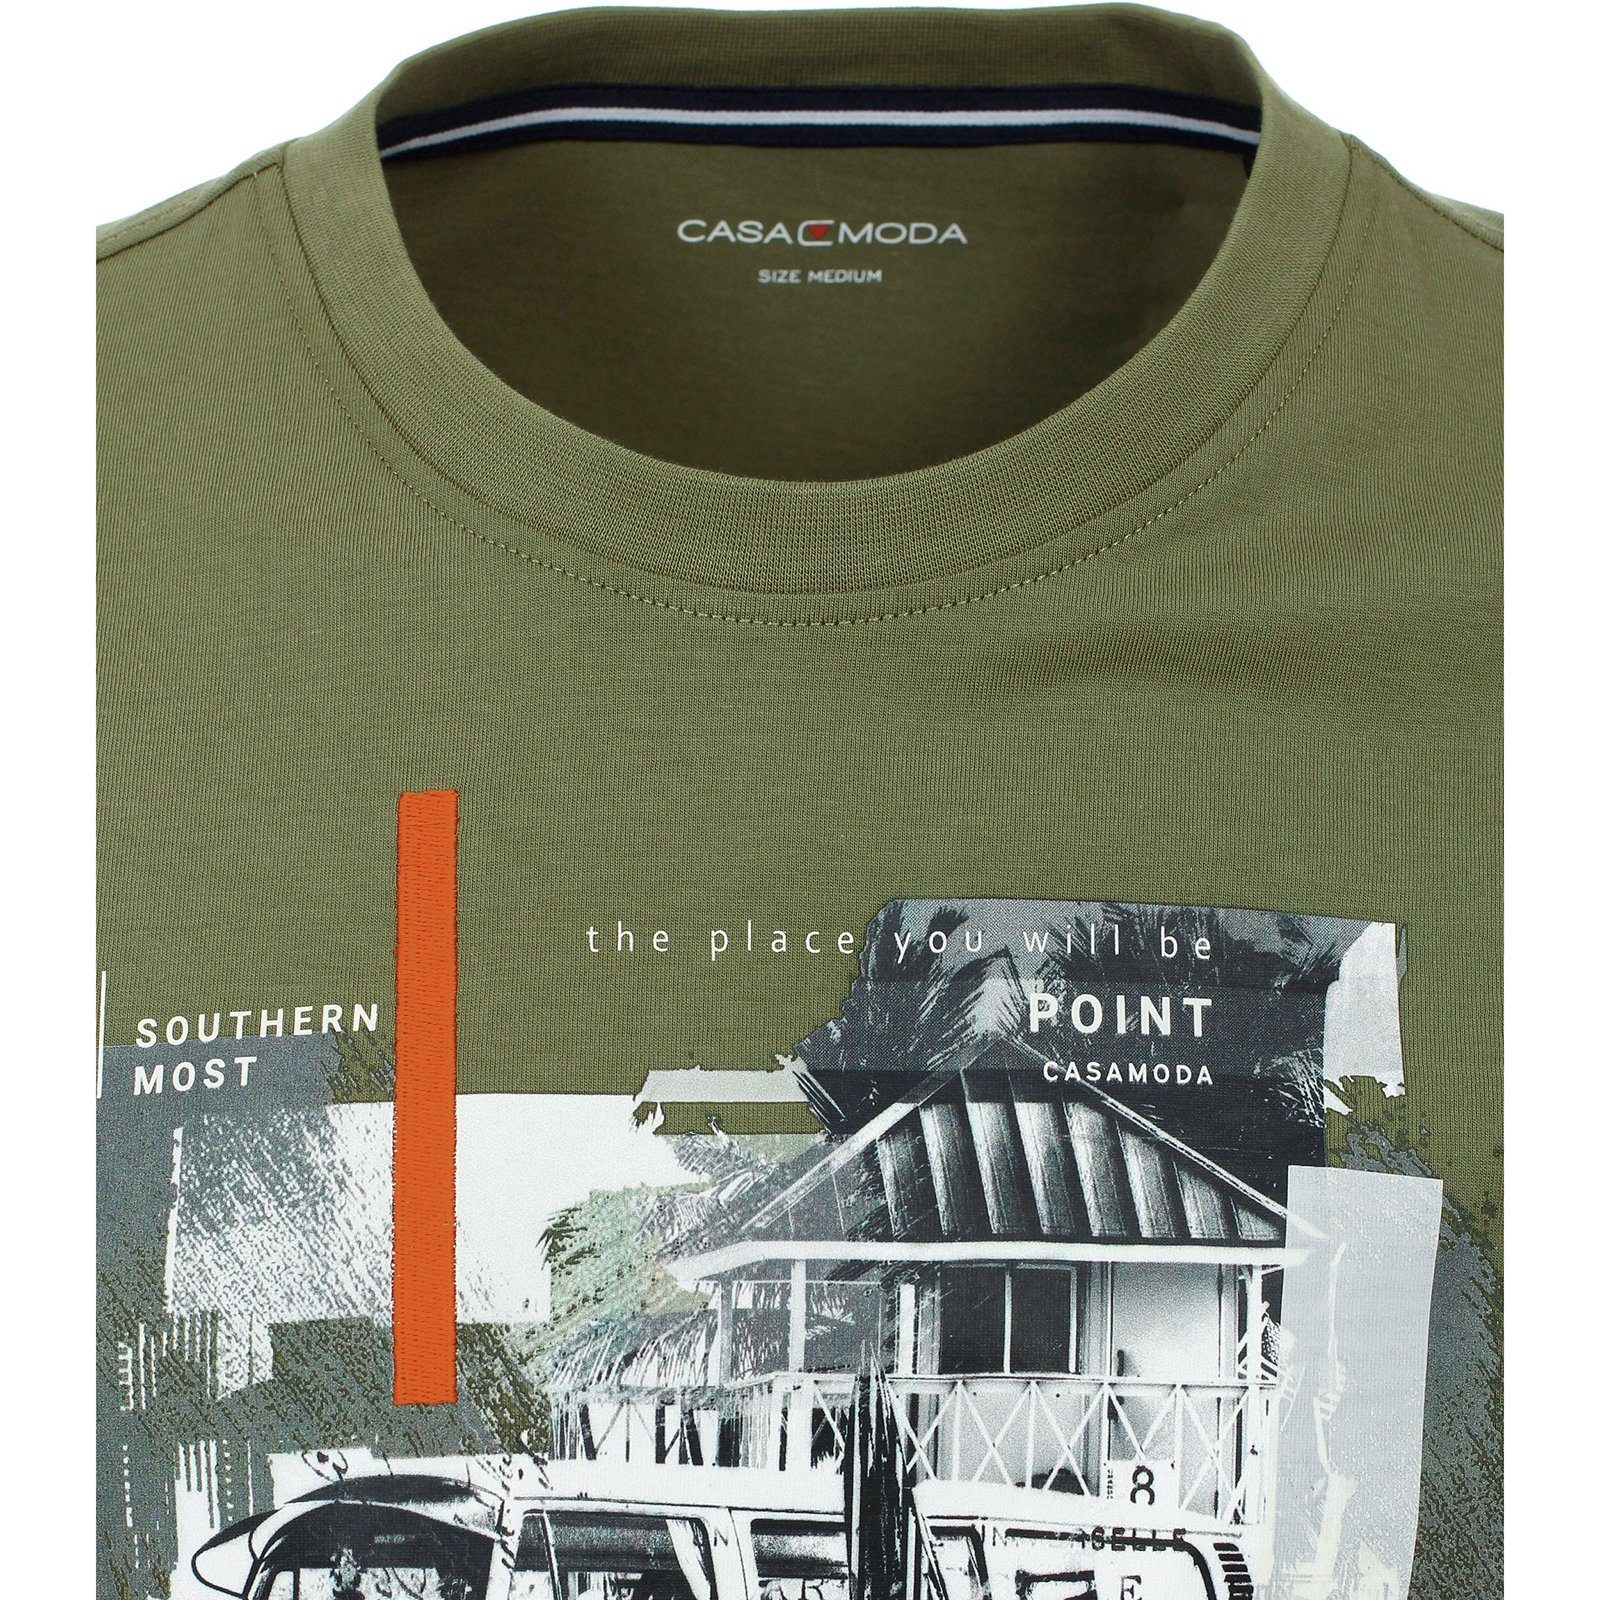 Rundhalsshirt olivgrün Florida-Print CASAMODA Herren T-Shirt Große CasaModa Größen